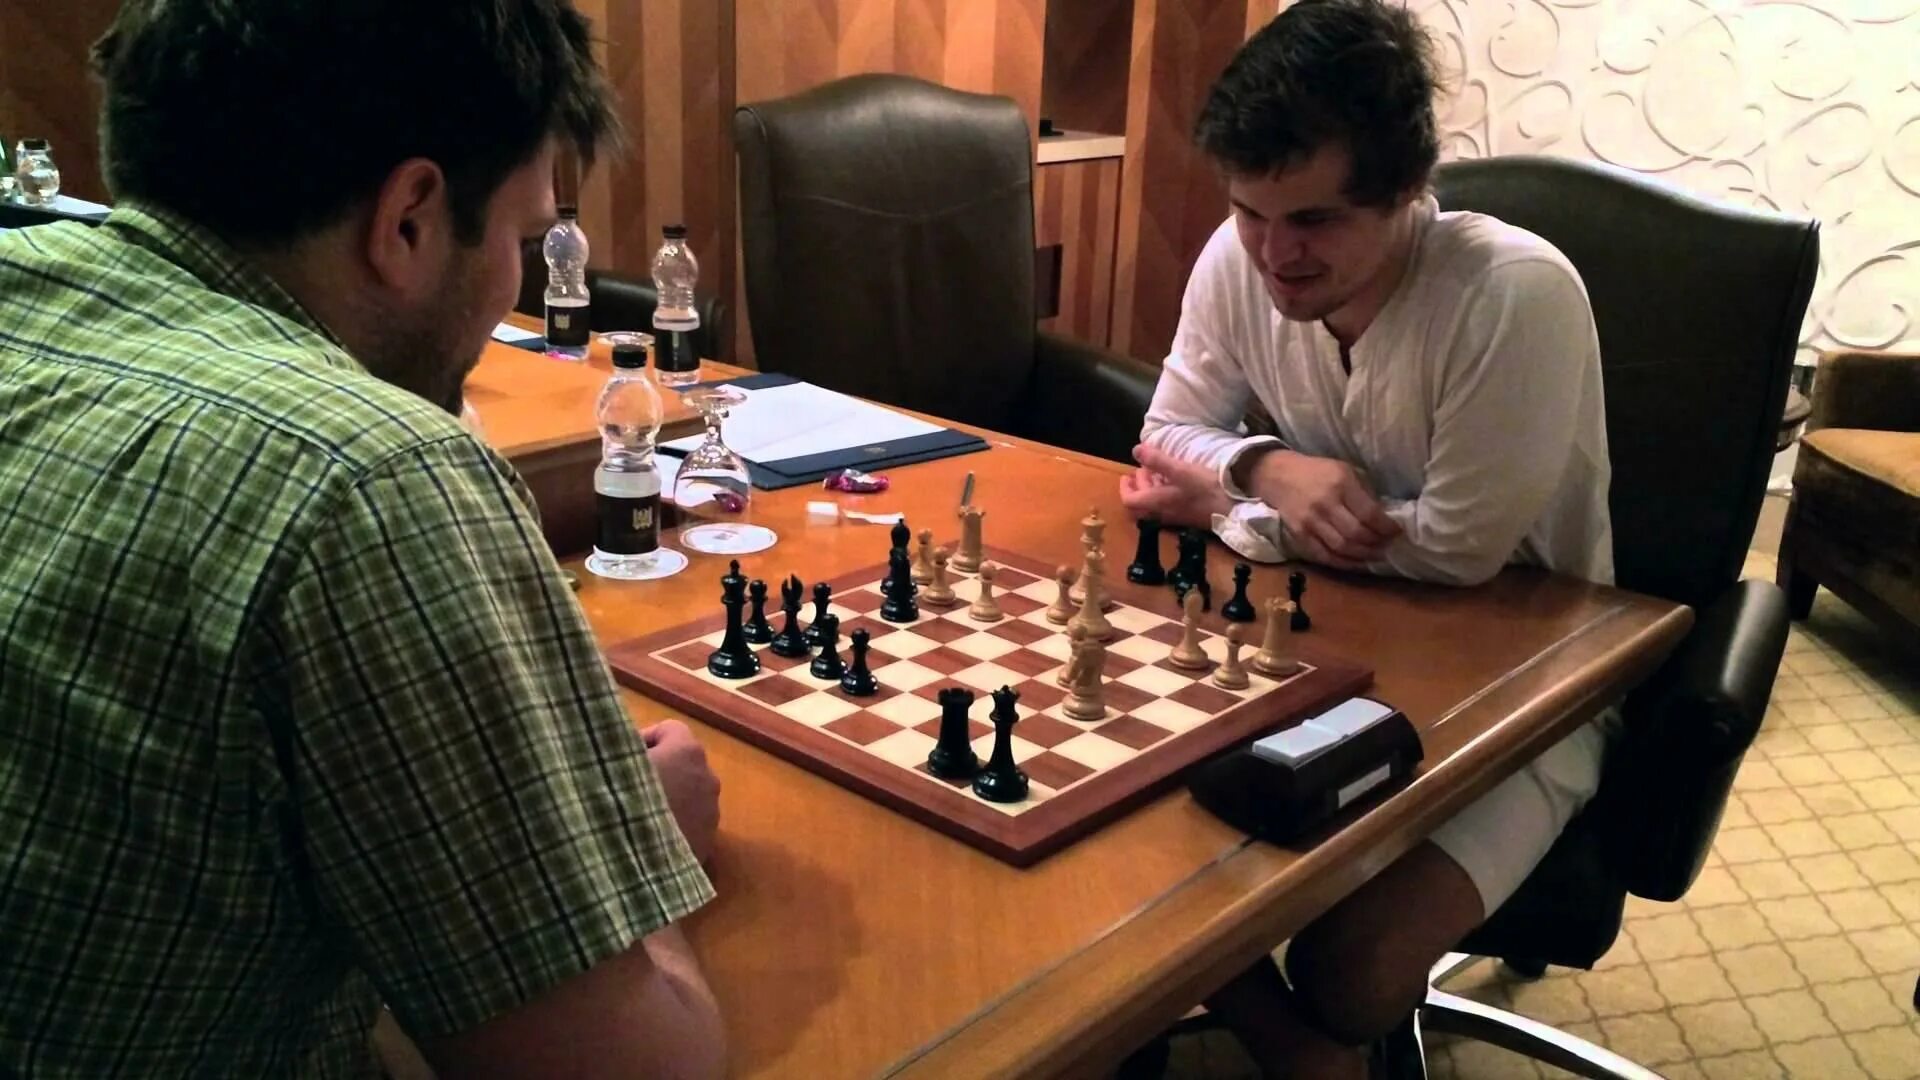 We like playing chess. Магнус Чесс. Противостояние шахматистов. Злой шахматист. Шахматы игра богов.